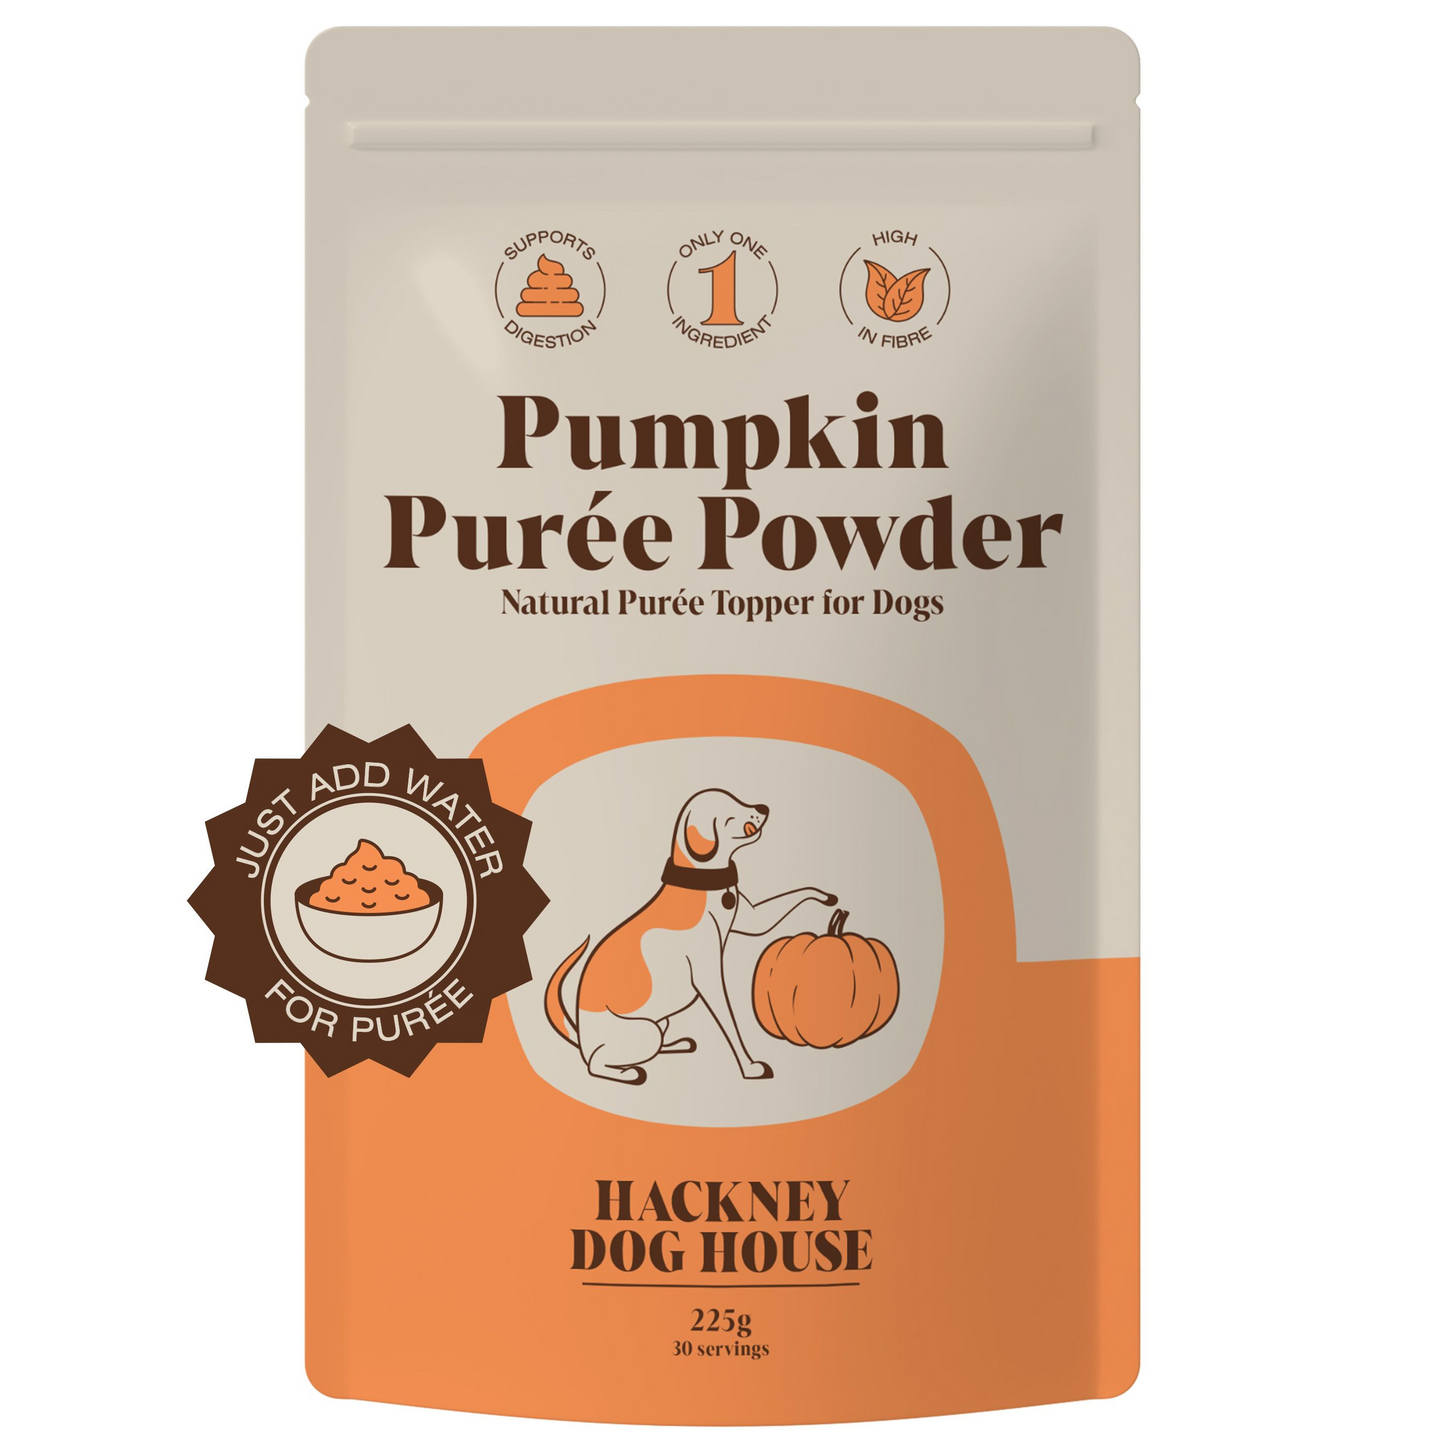 Pumpkin Powder For Dogs | Canned Pumpkin Purée Alternative | 30 Servings